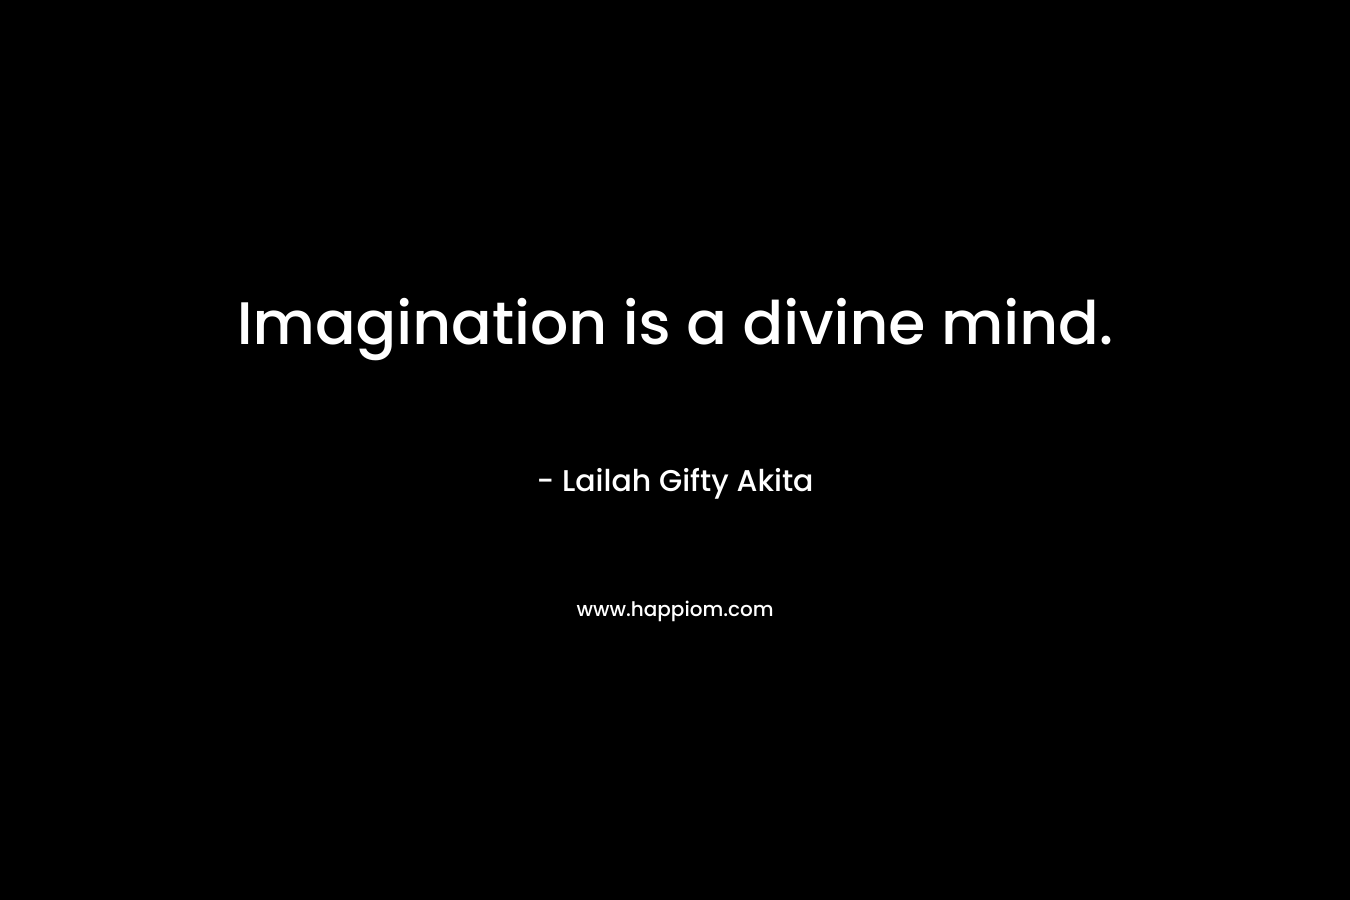 Imagination is a divine mind.